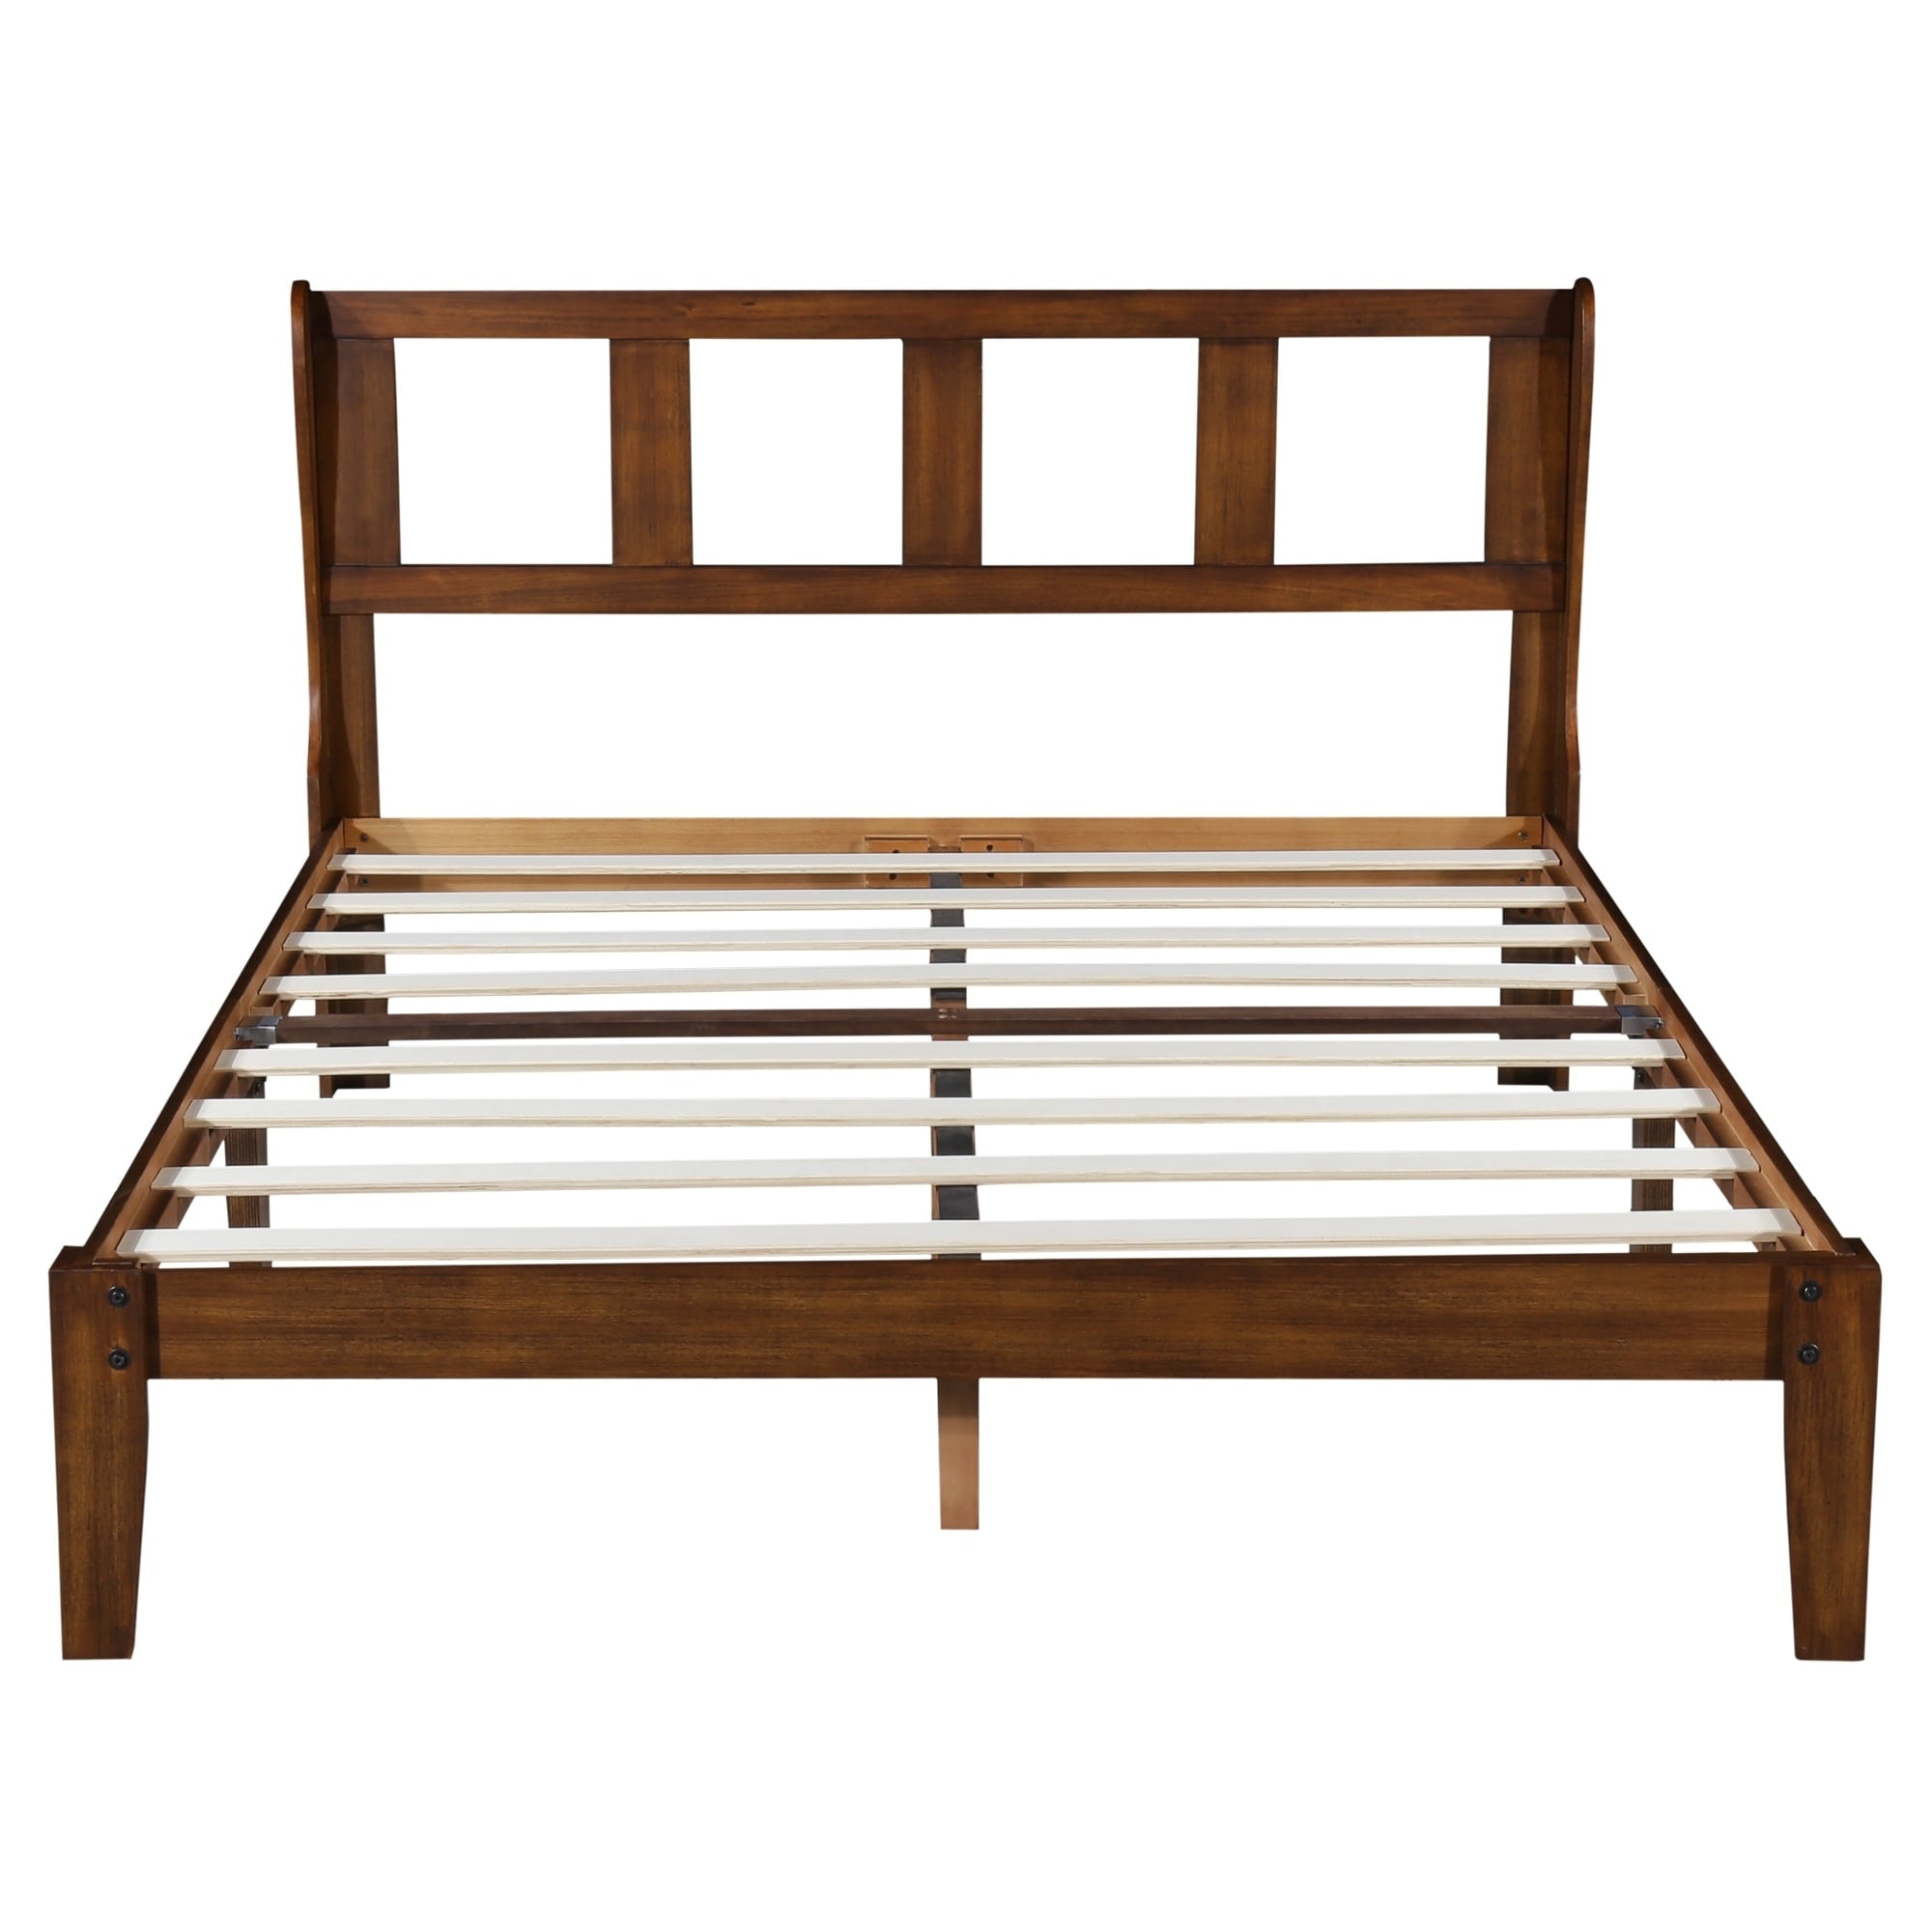 Sleeplanner 14 Inch Wood Bed Frame With Headboard